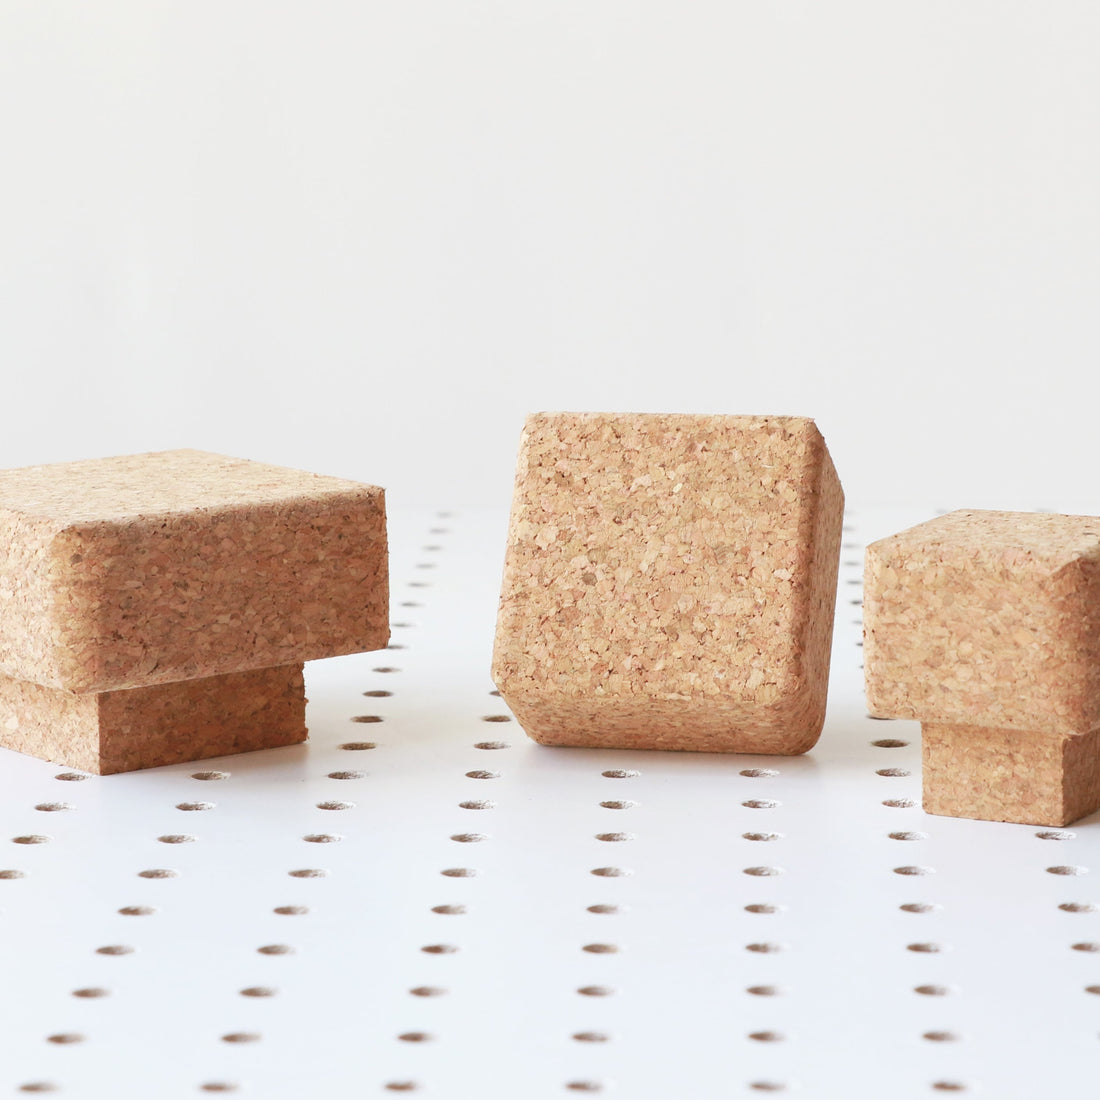 Organic Cork Knob | Medium Square